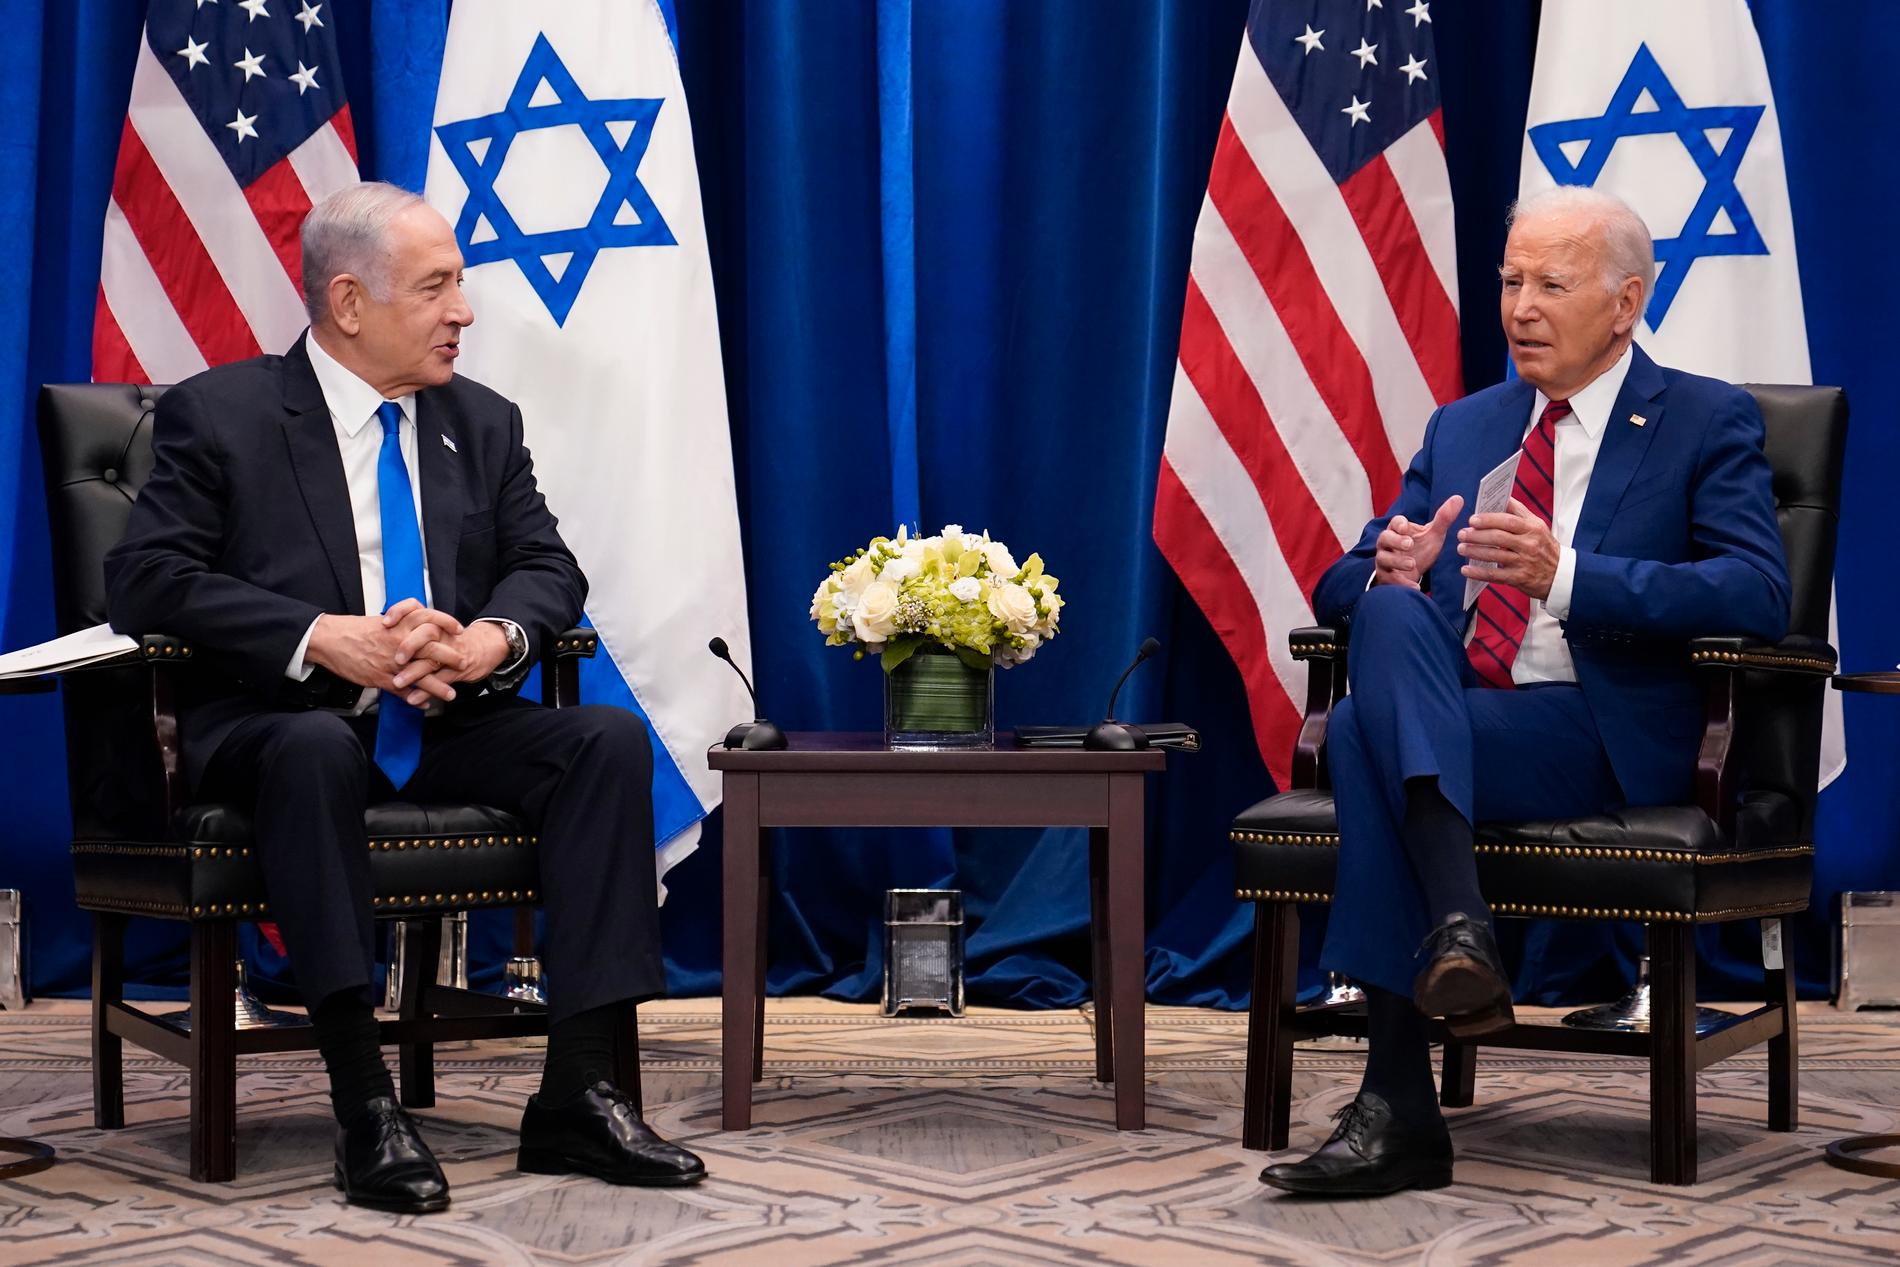 US President Joe Biden to Visit Israel and Jordan, Emphasizing Support for Israel’s Security